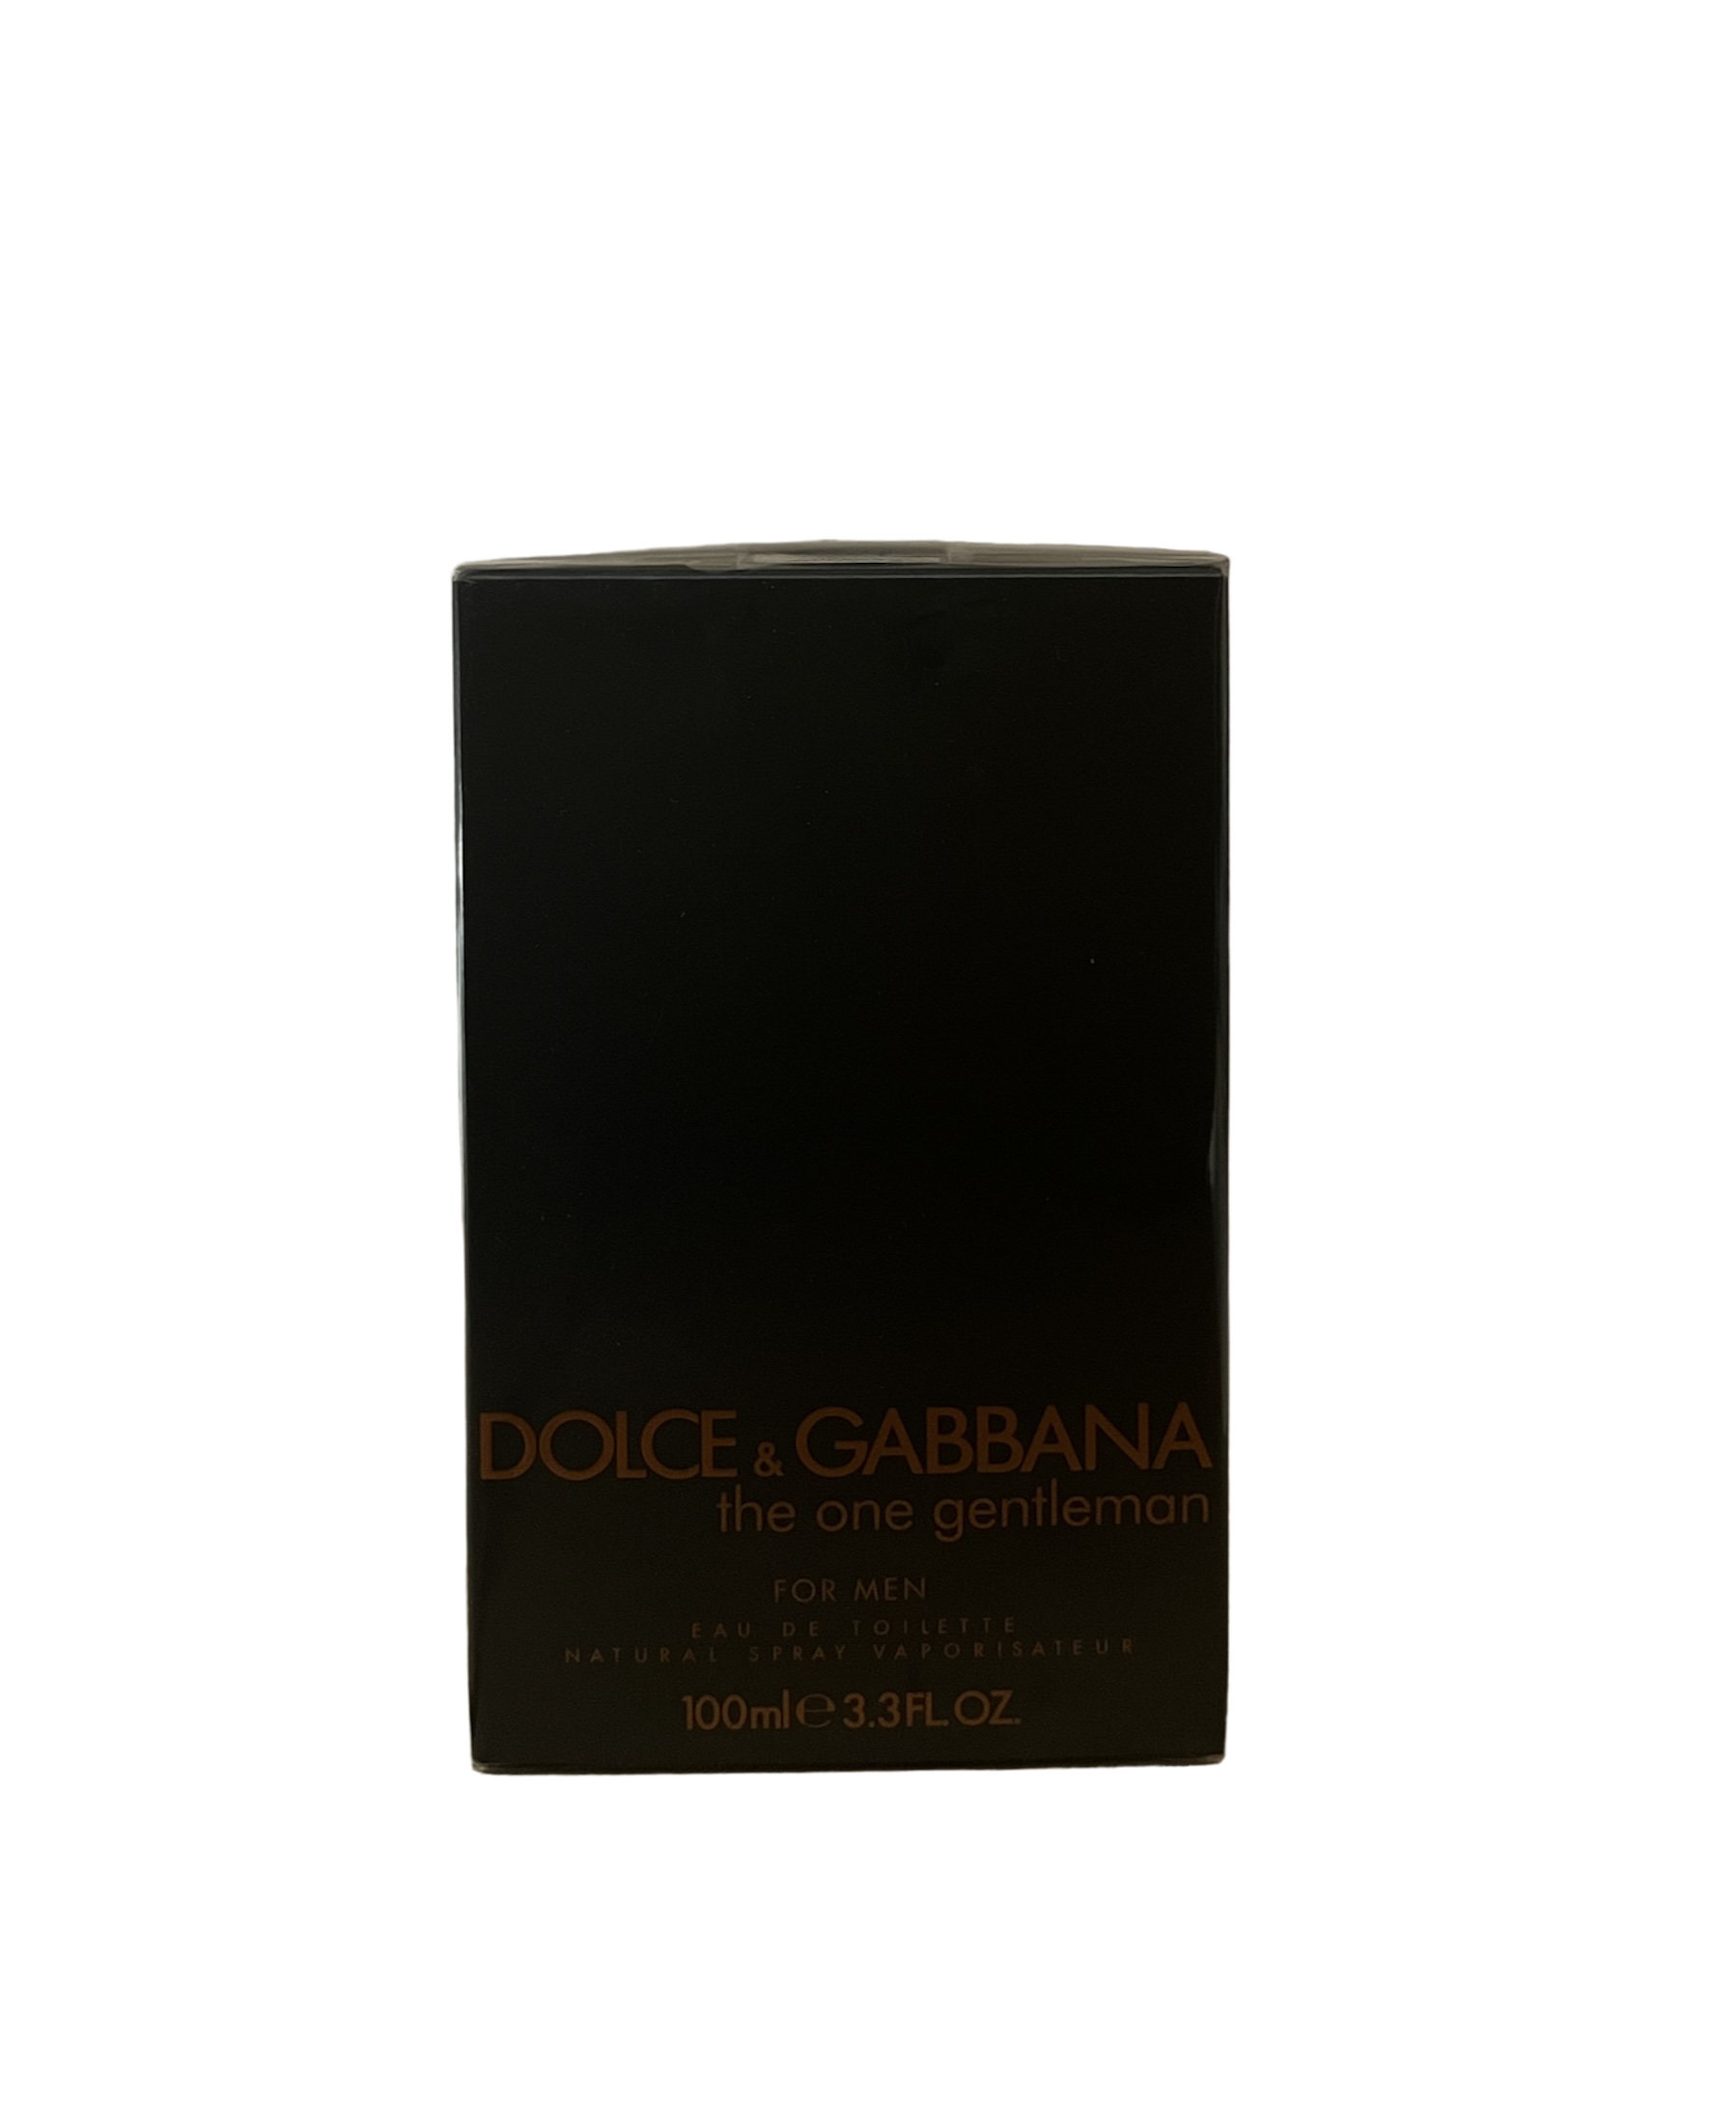 Dolce&Gabbana - The one gentleman (Eau de Toilette)